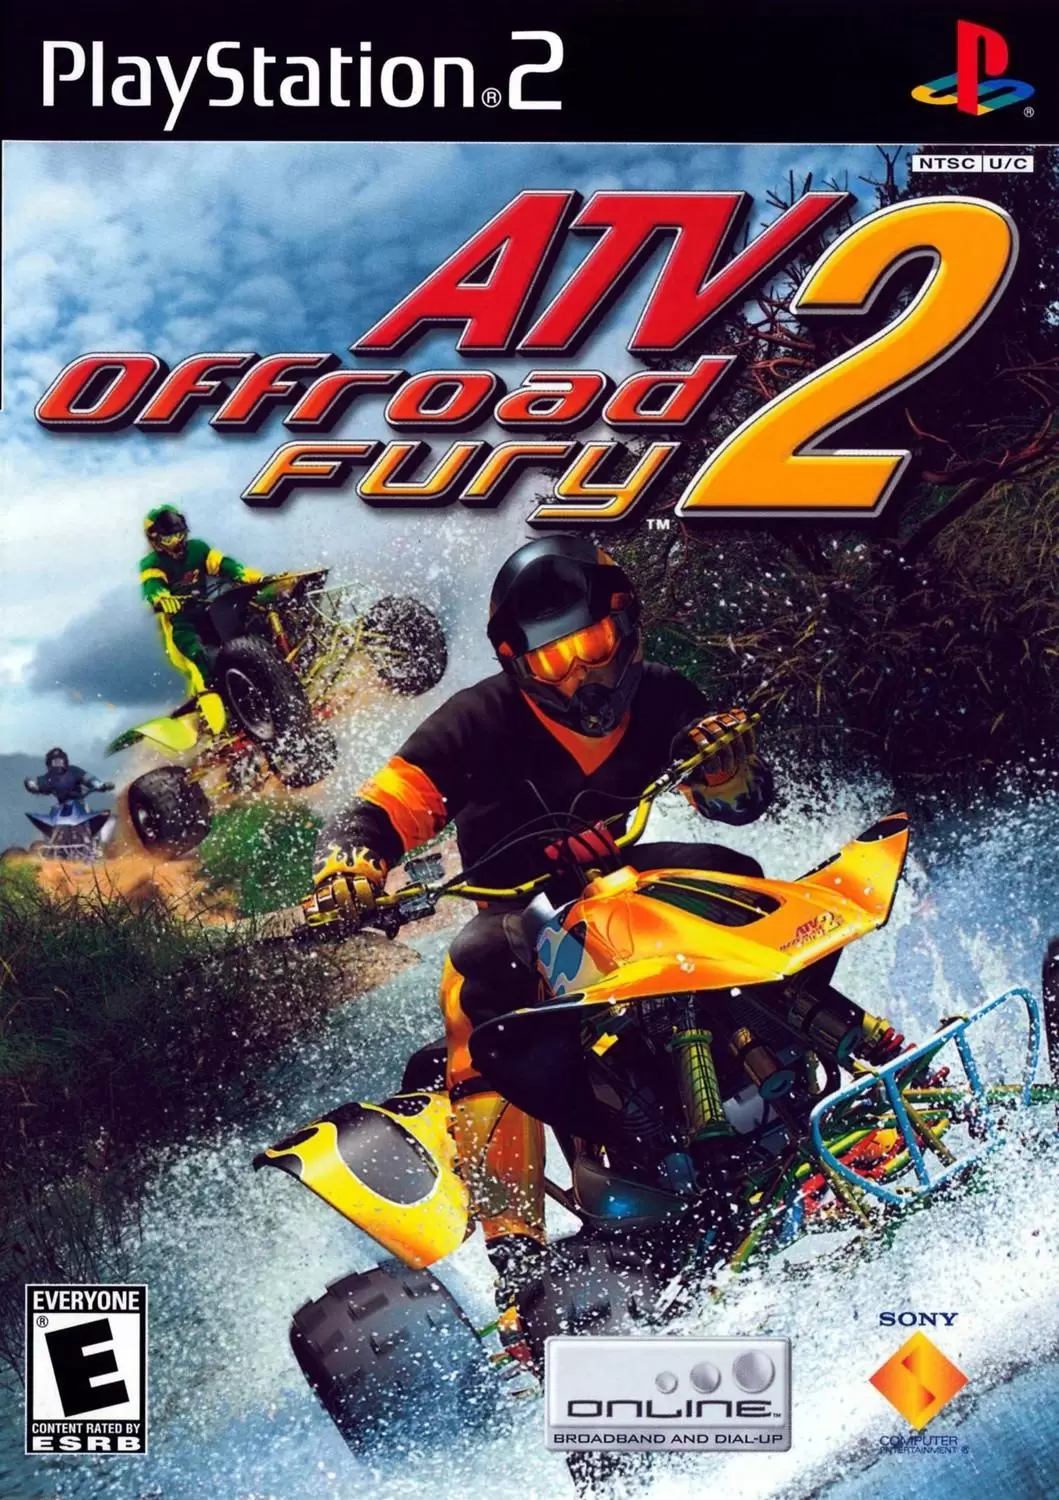 PS2 Games - ATV Offroad Fury 2